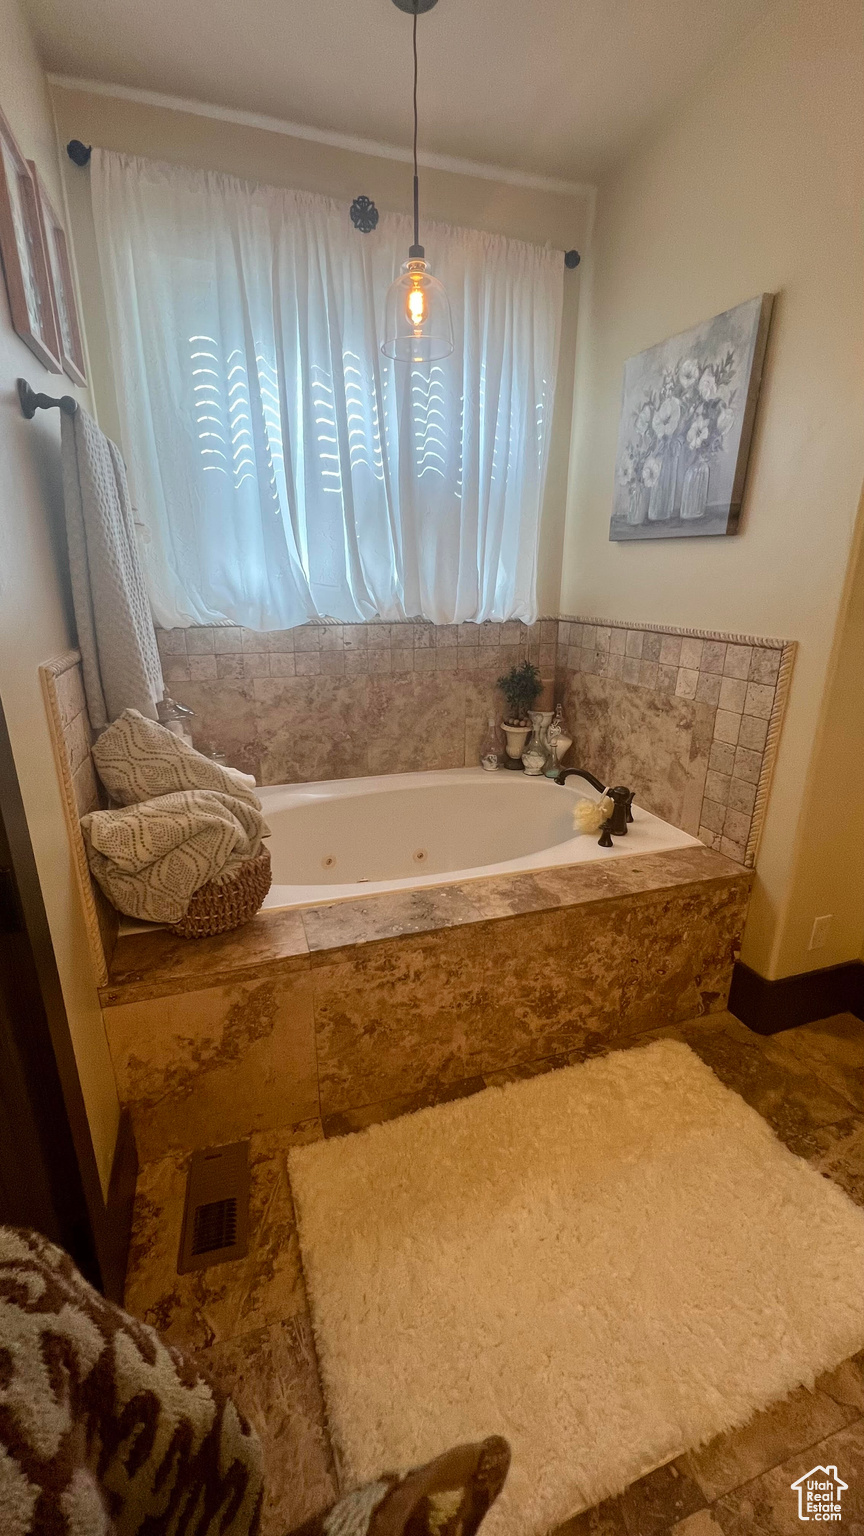 Bathroom featuring tile floors and tiled tub